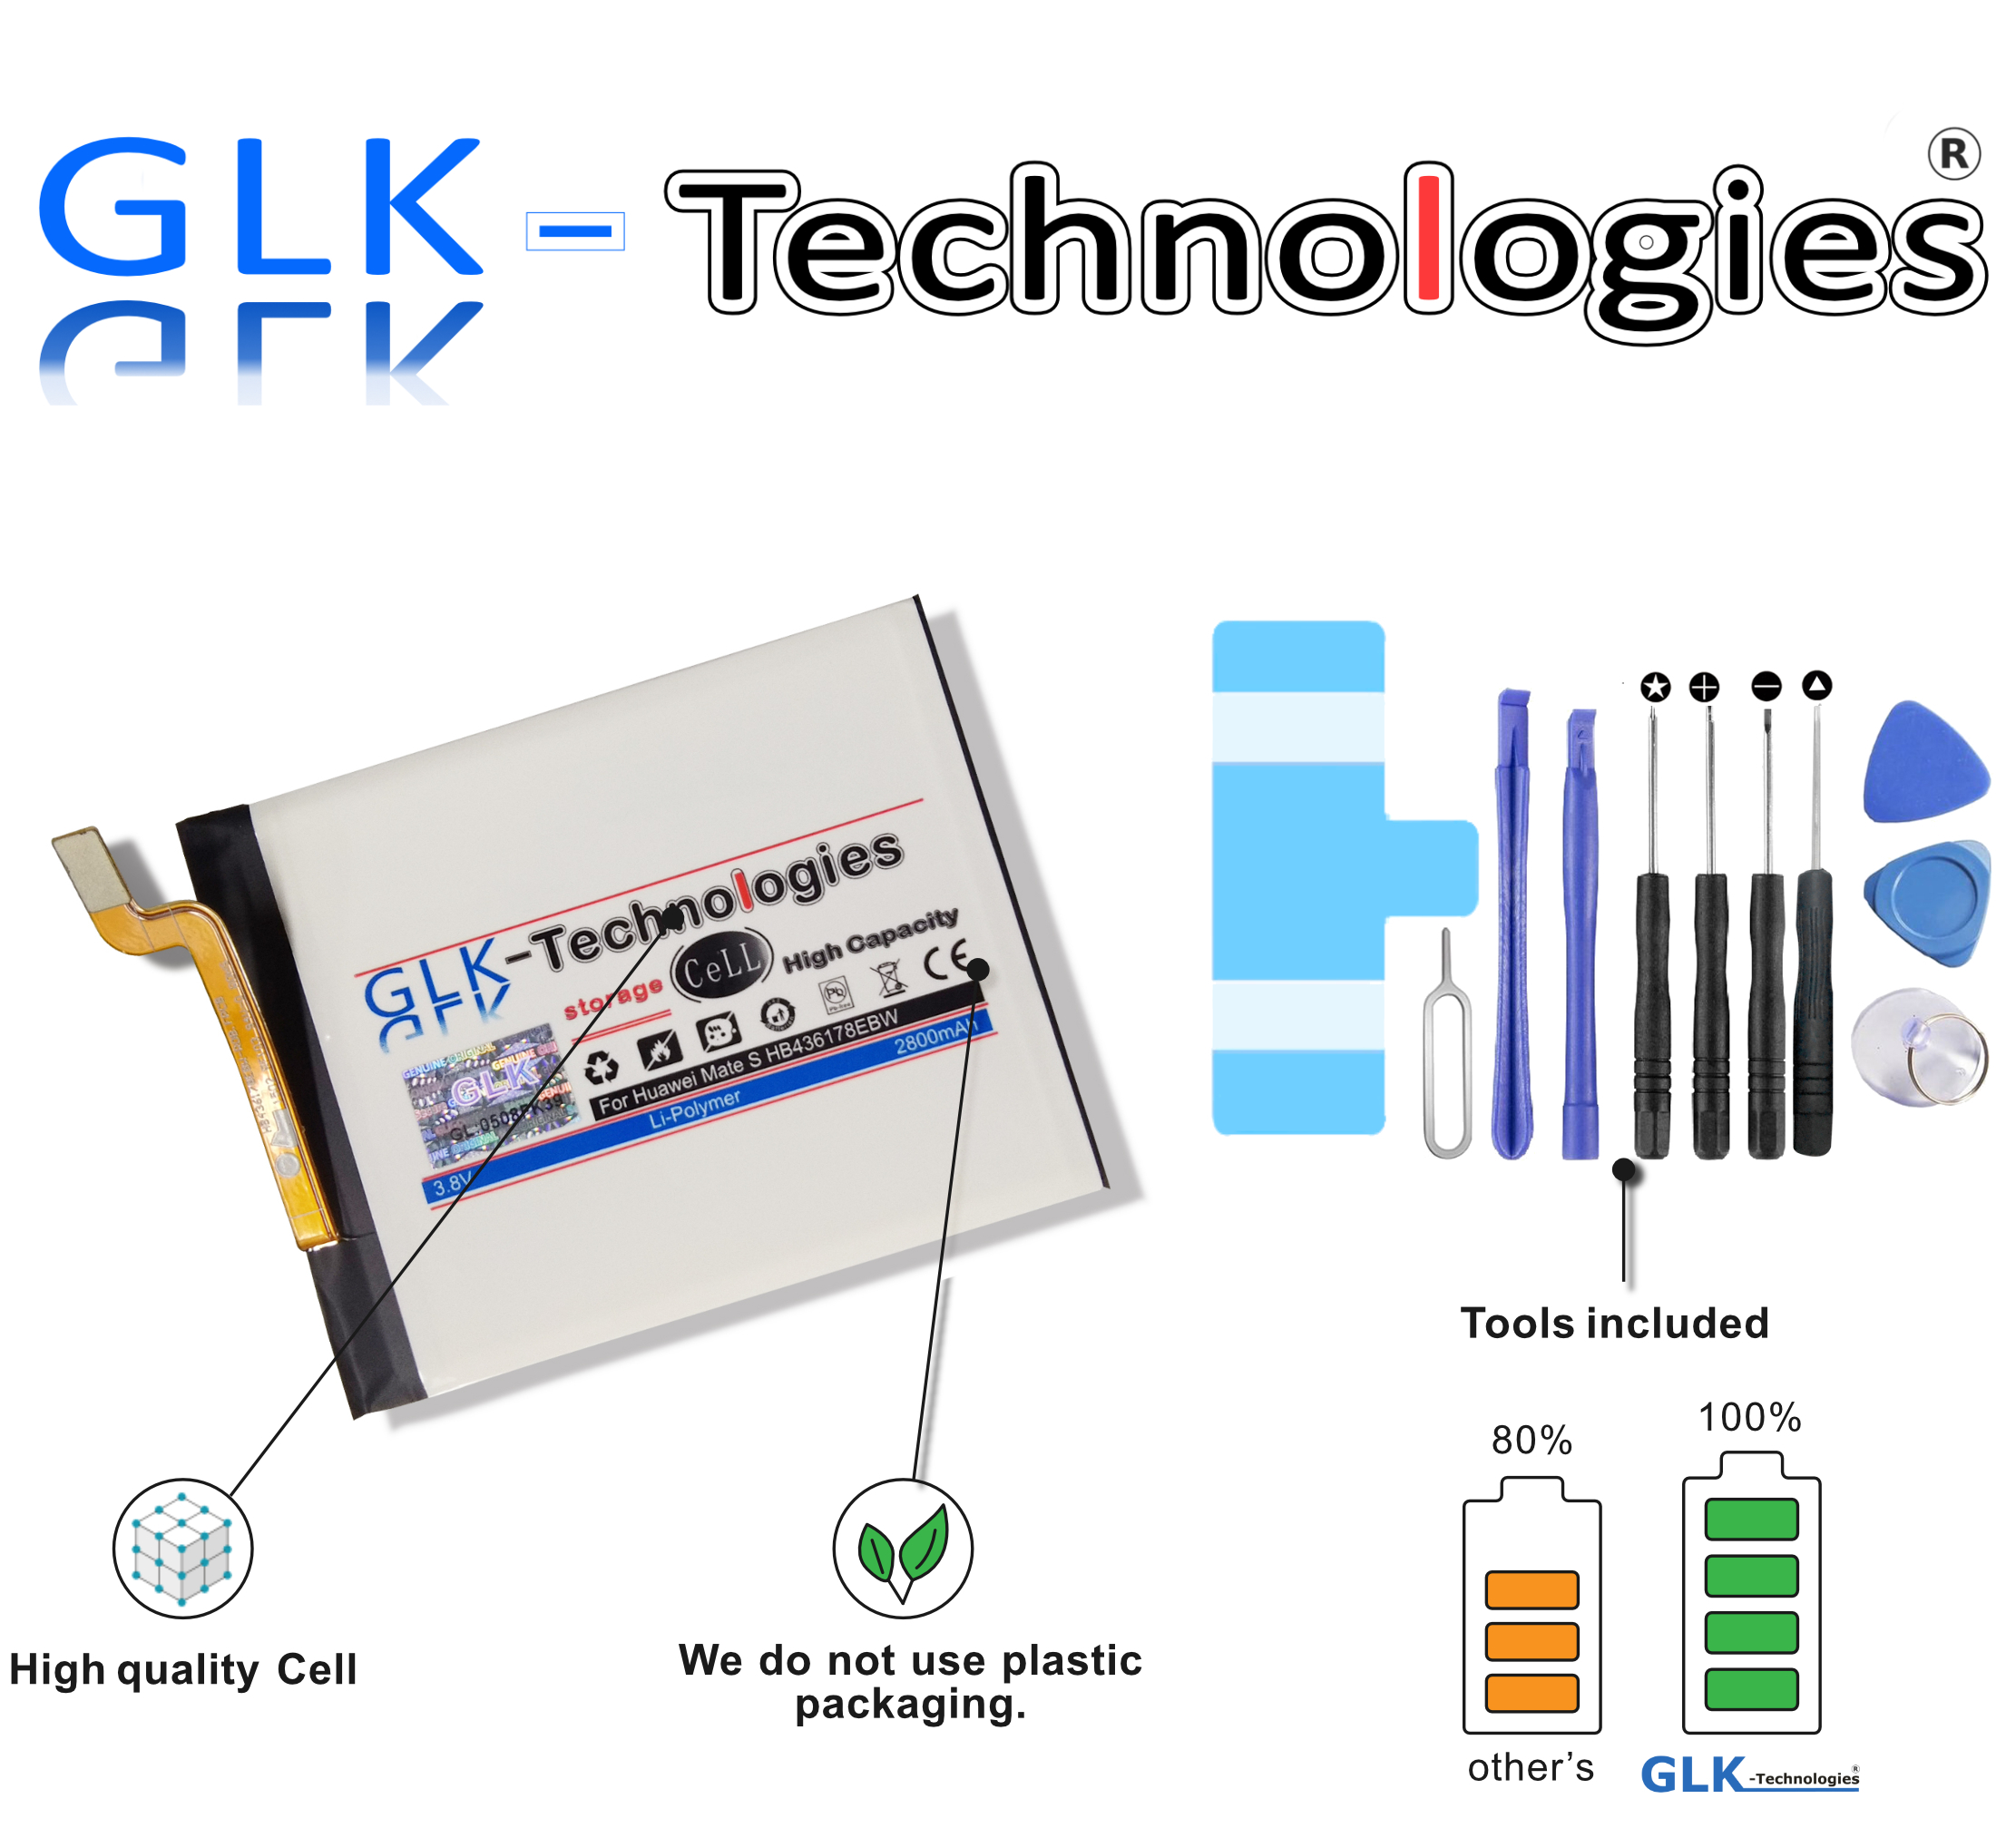 Akku GLK-TECHNOLOGIES Li-Ion Ersatz inkl HB436178EBW Werkzeugset Mate Akku Huawei | für 2800 Mate S Battery mAh 7S Handy Ascend | Smartphone